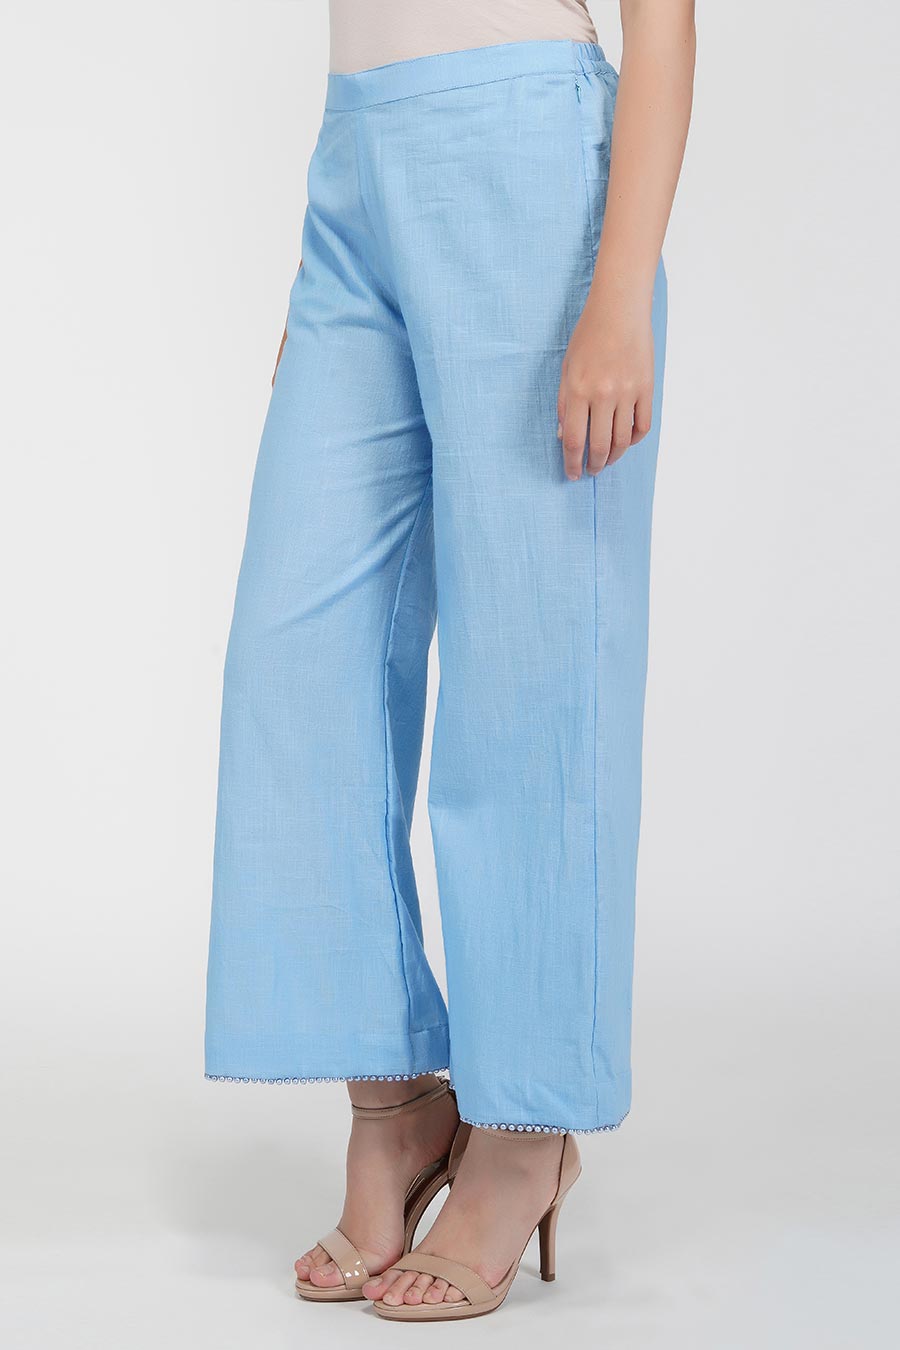 Pearl Hemline Blue Flared Pants